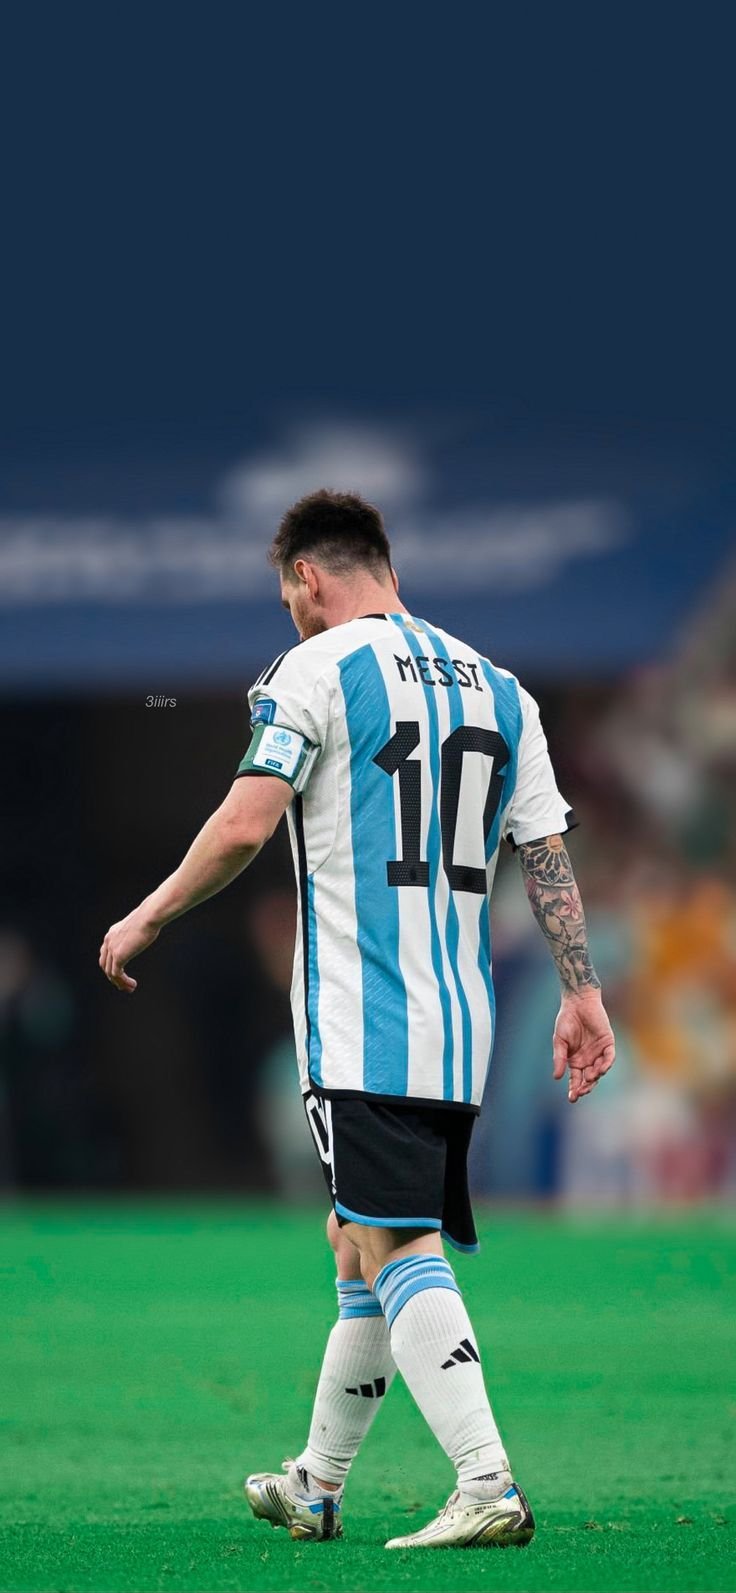 Messi Playing Soccer Wallpaper